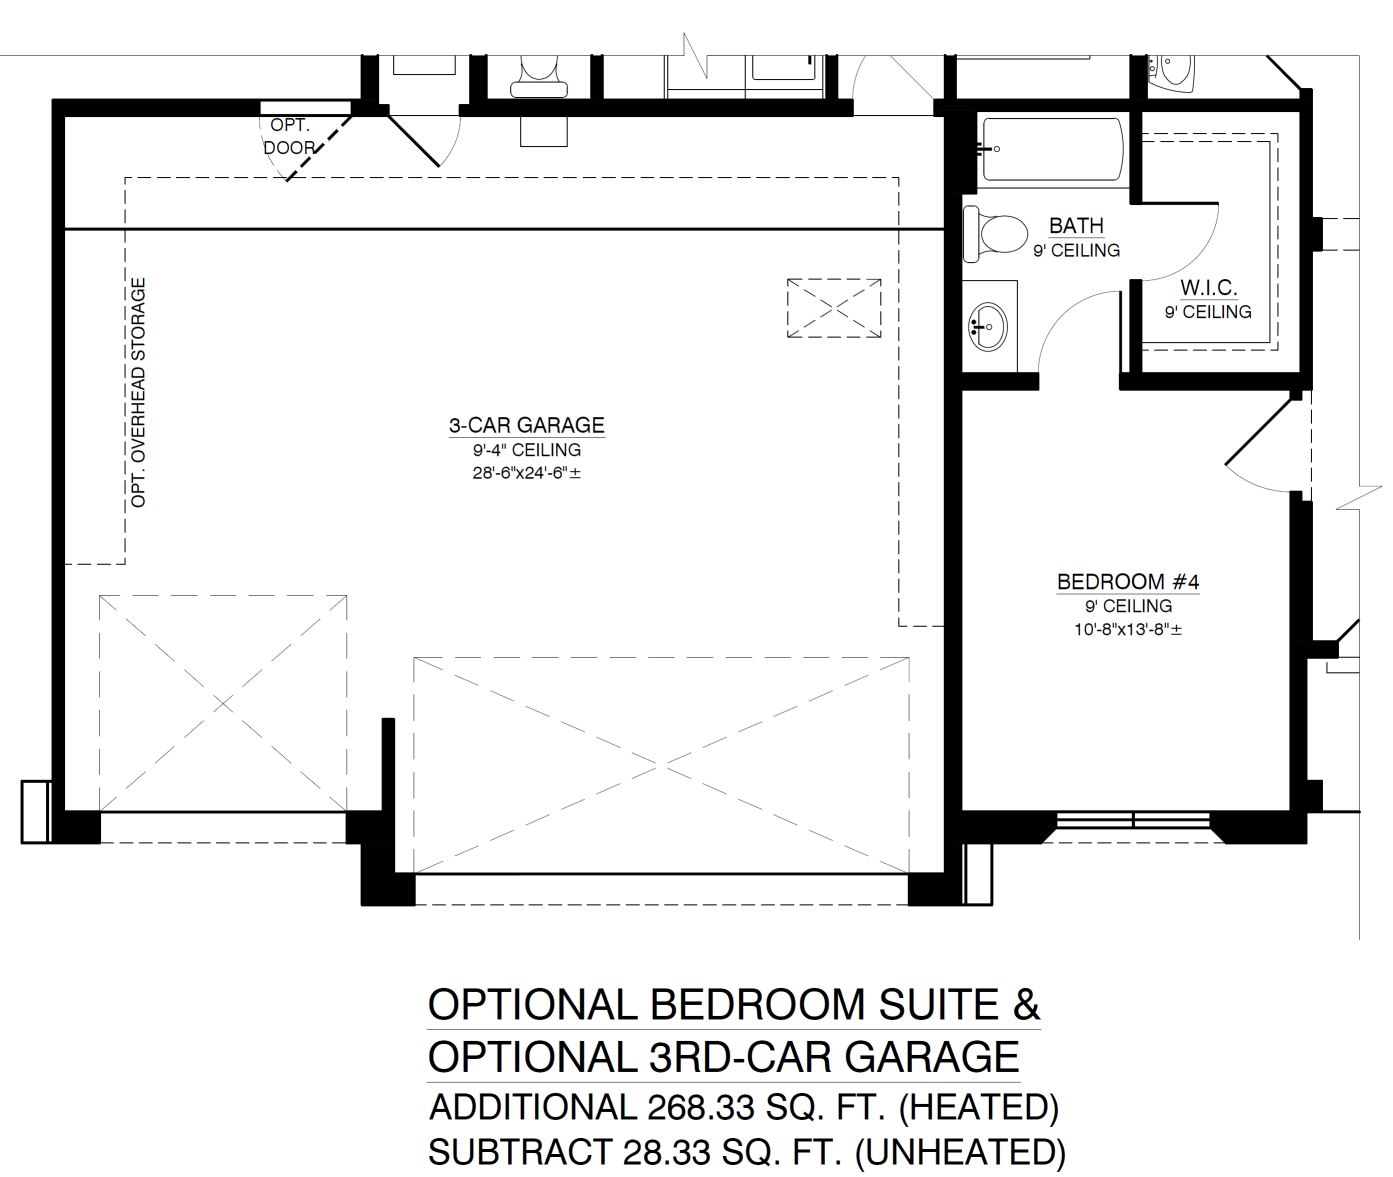 Optional Bedroom Suite and 3rd Garage